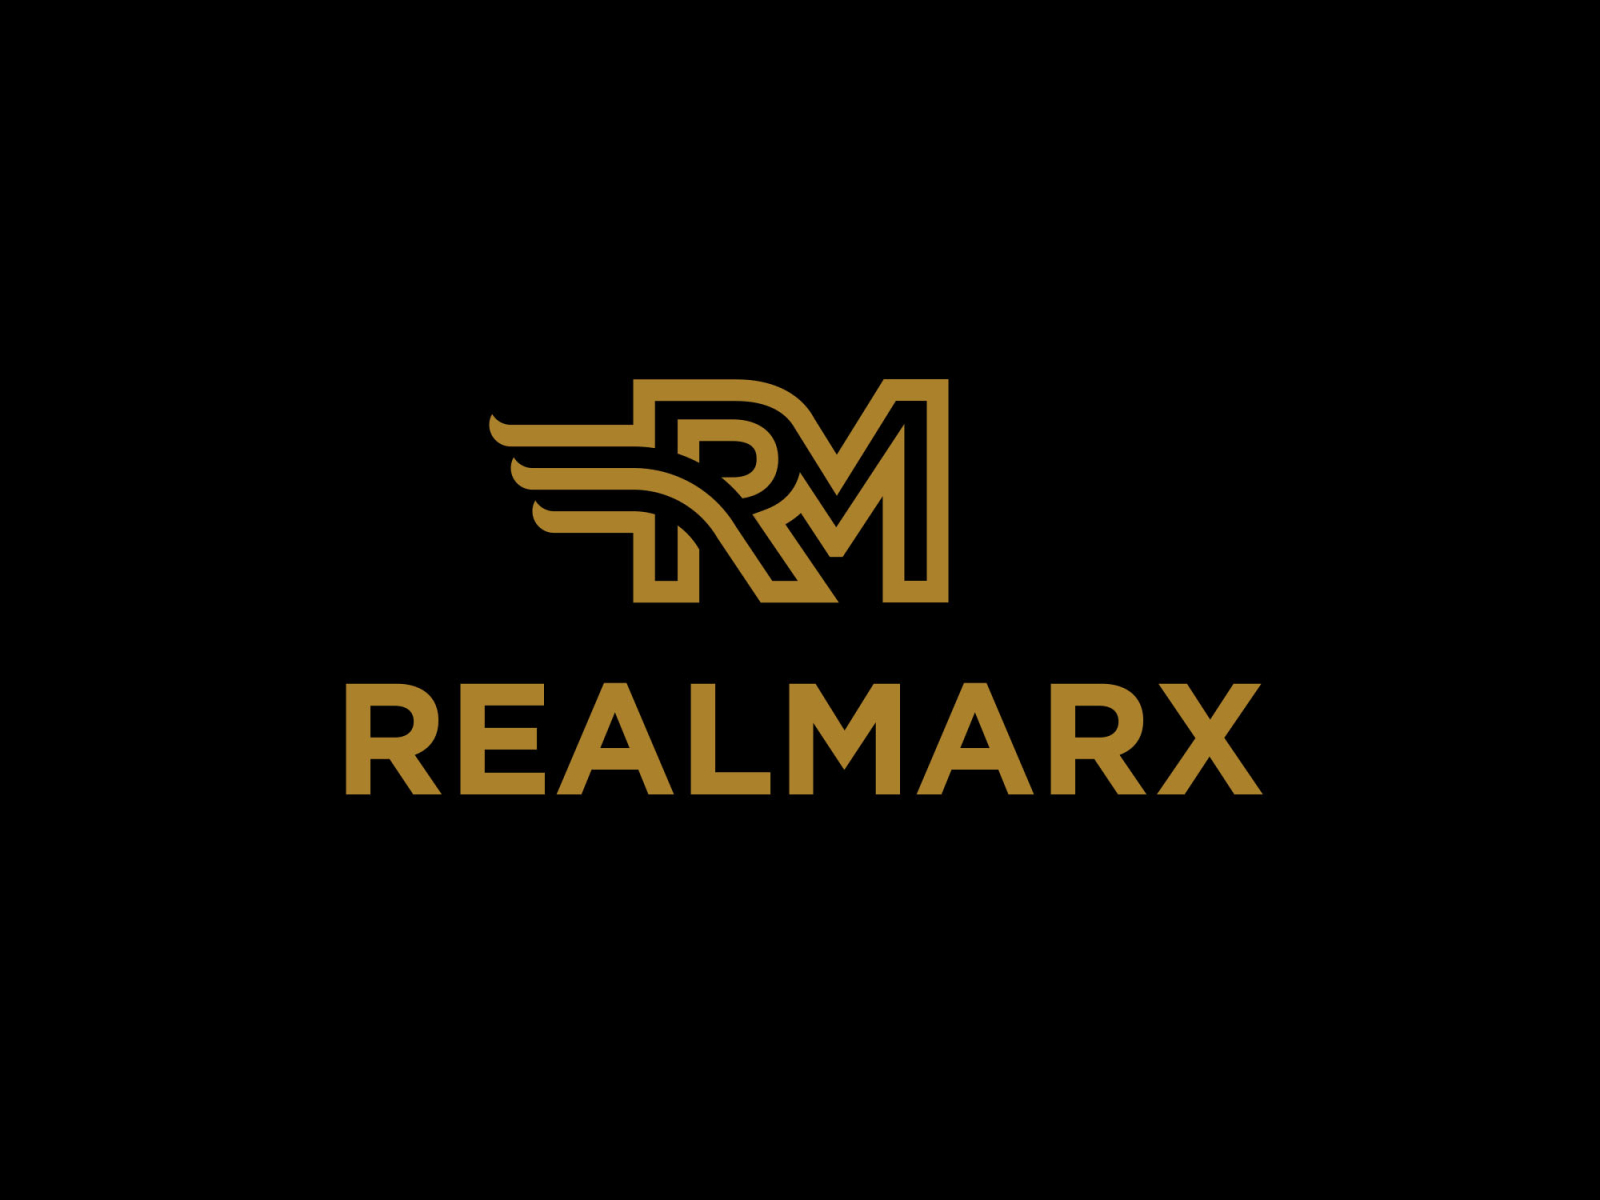 RealMarx Logo by Imran Firoz on Dribbble